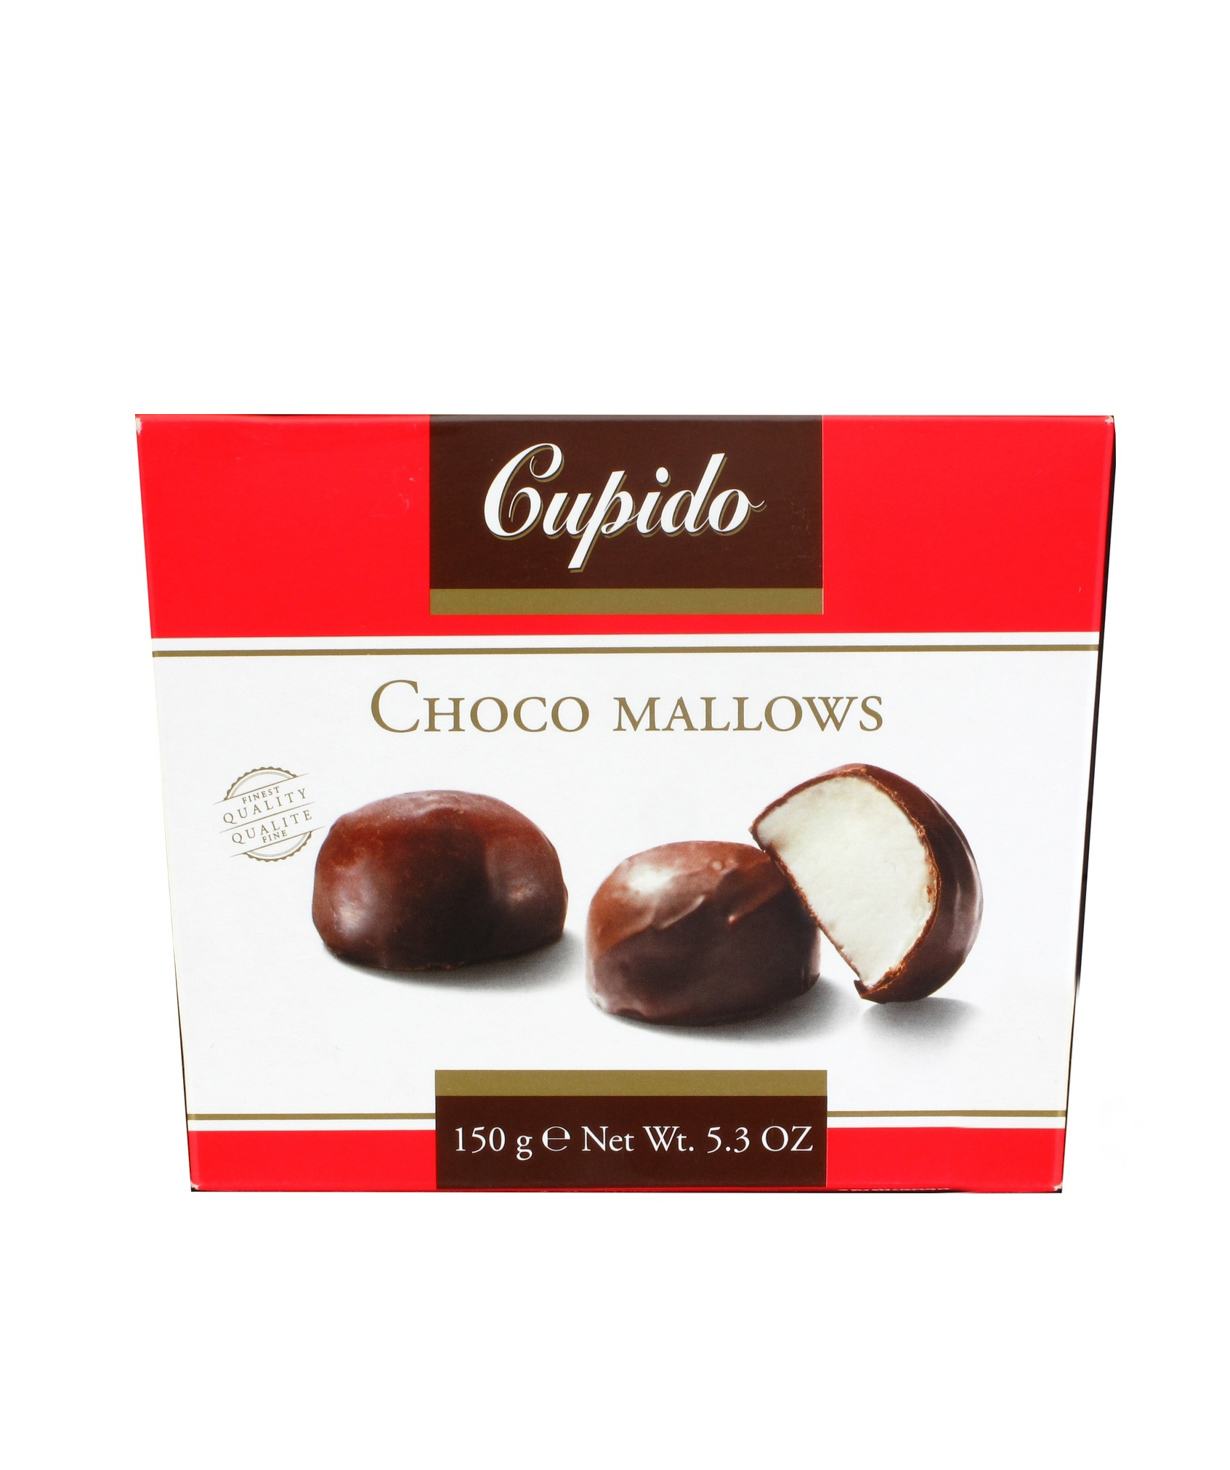 Chocolate candies `Cupido Choco Mallows` 150g